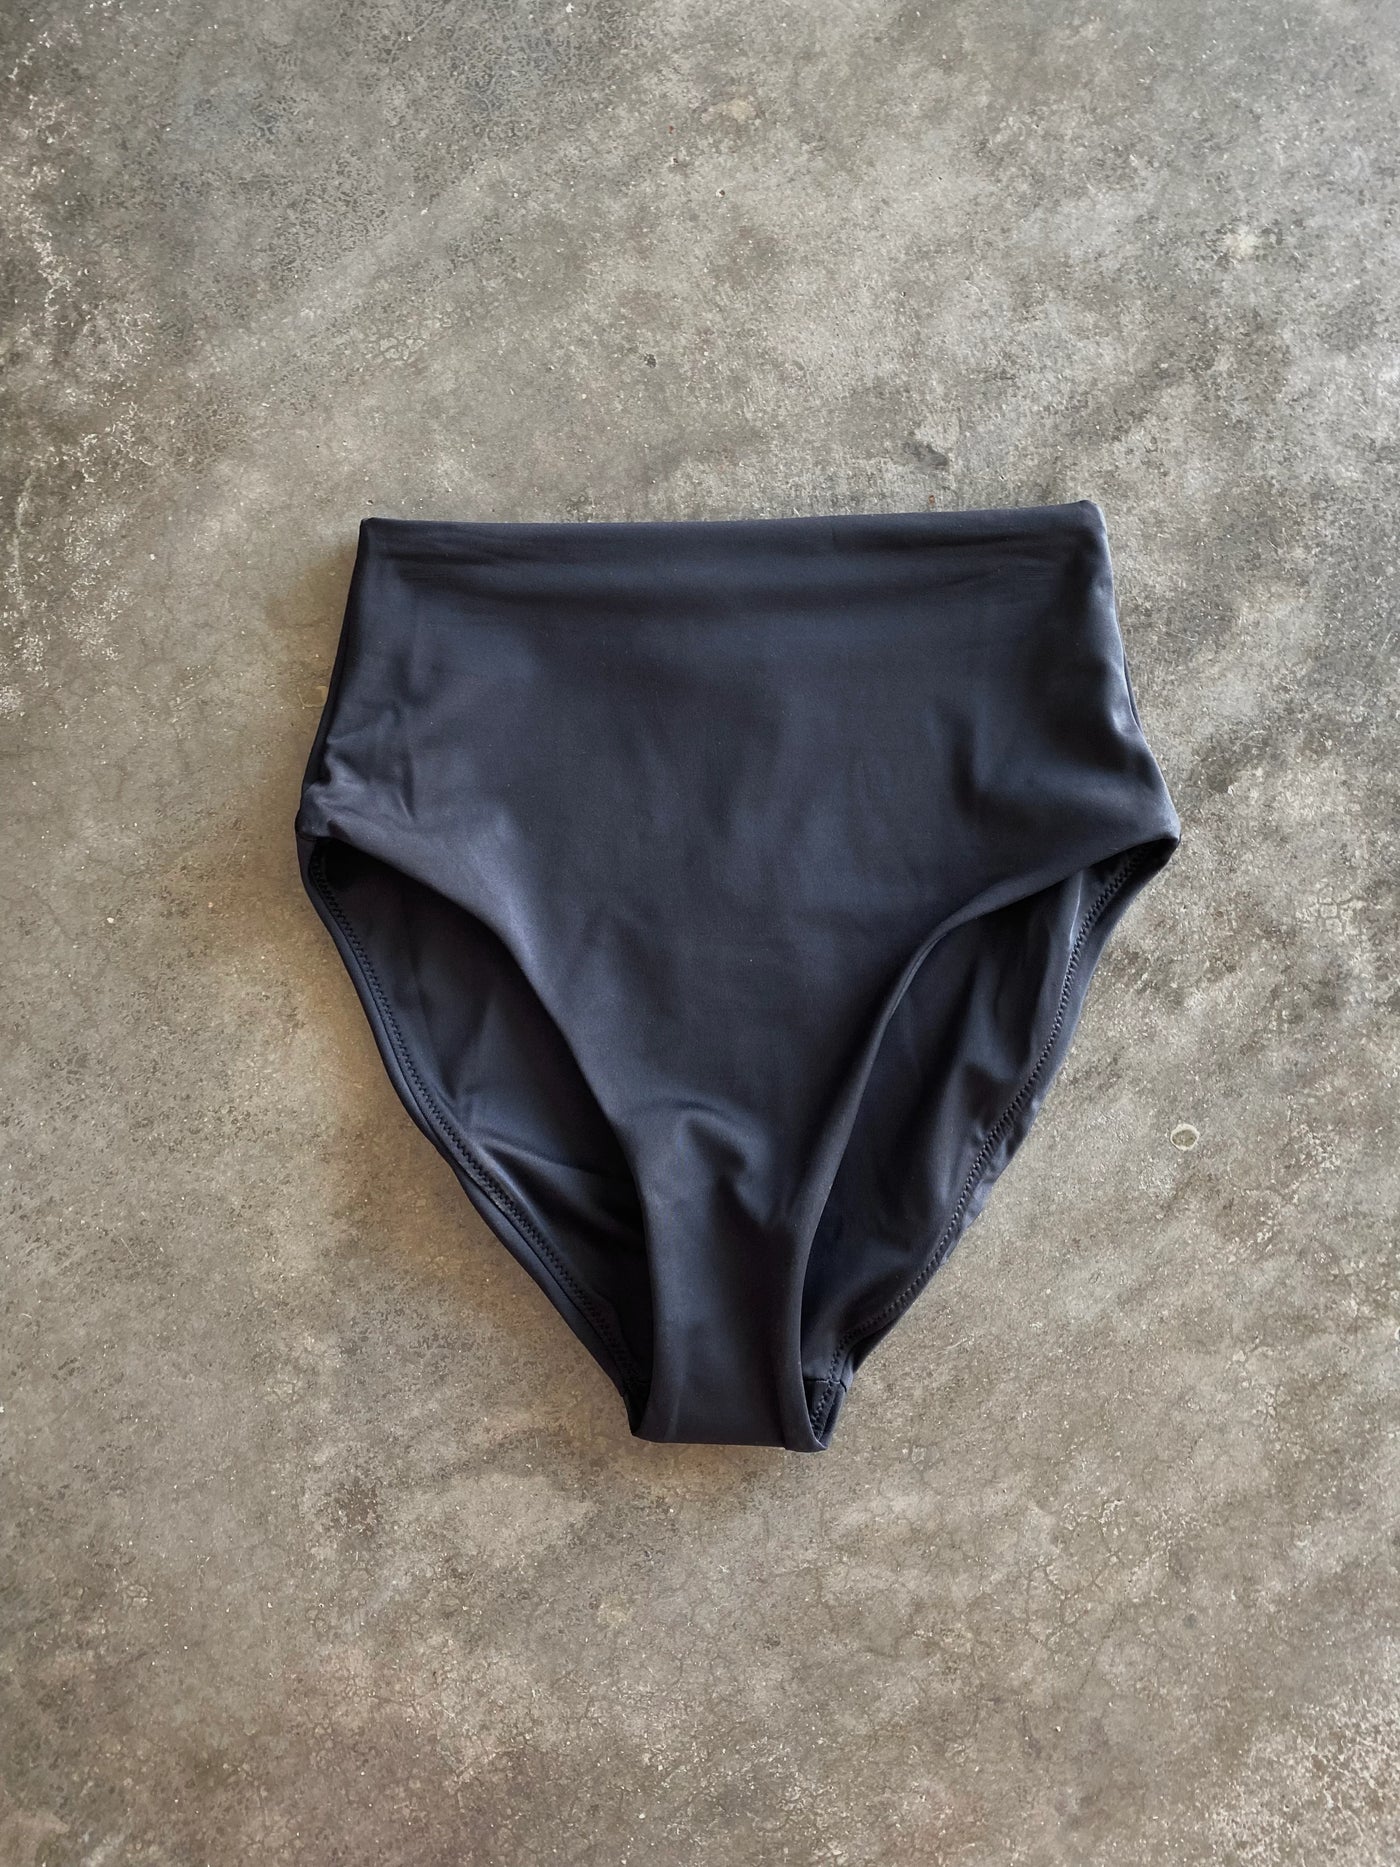 Frekl retro bathing suit bottom